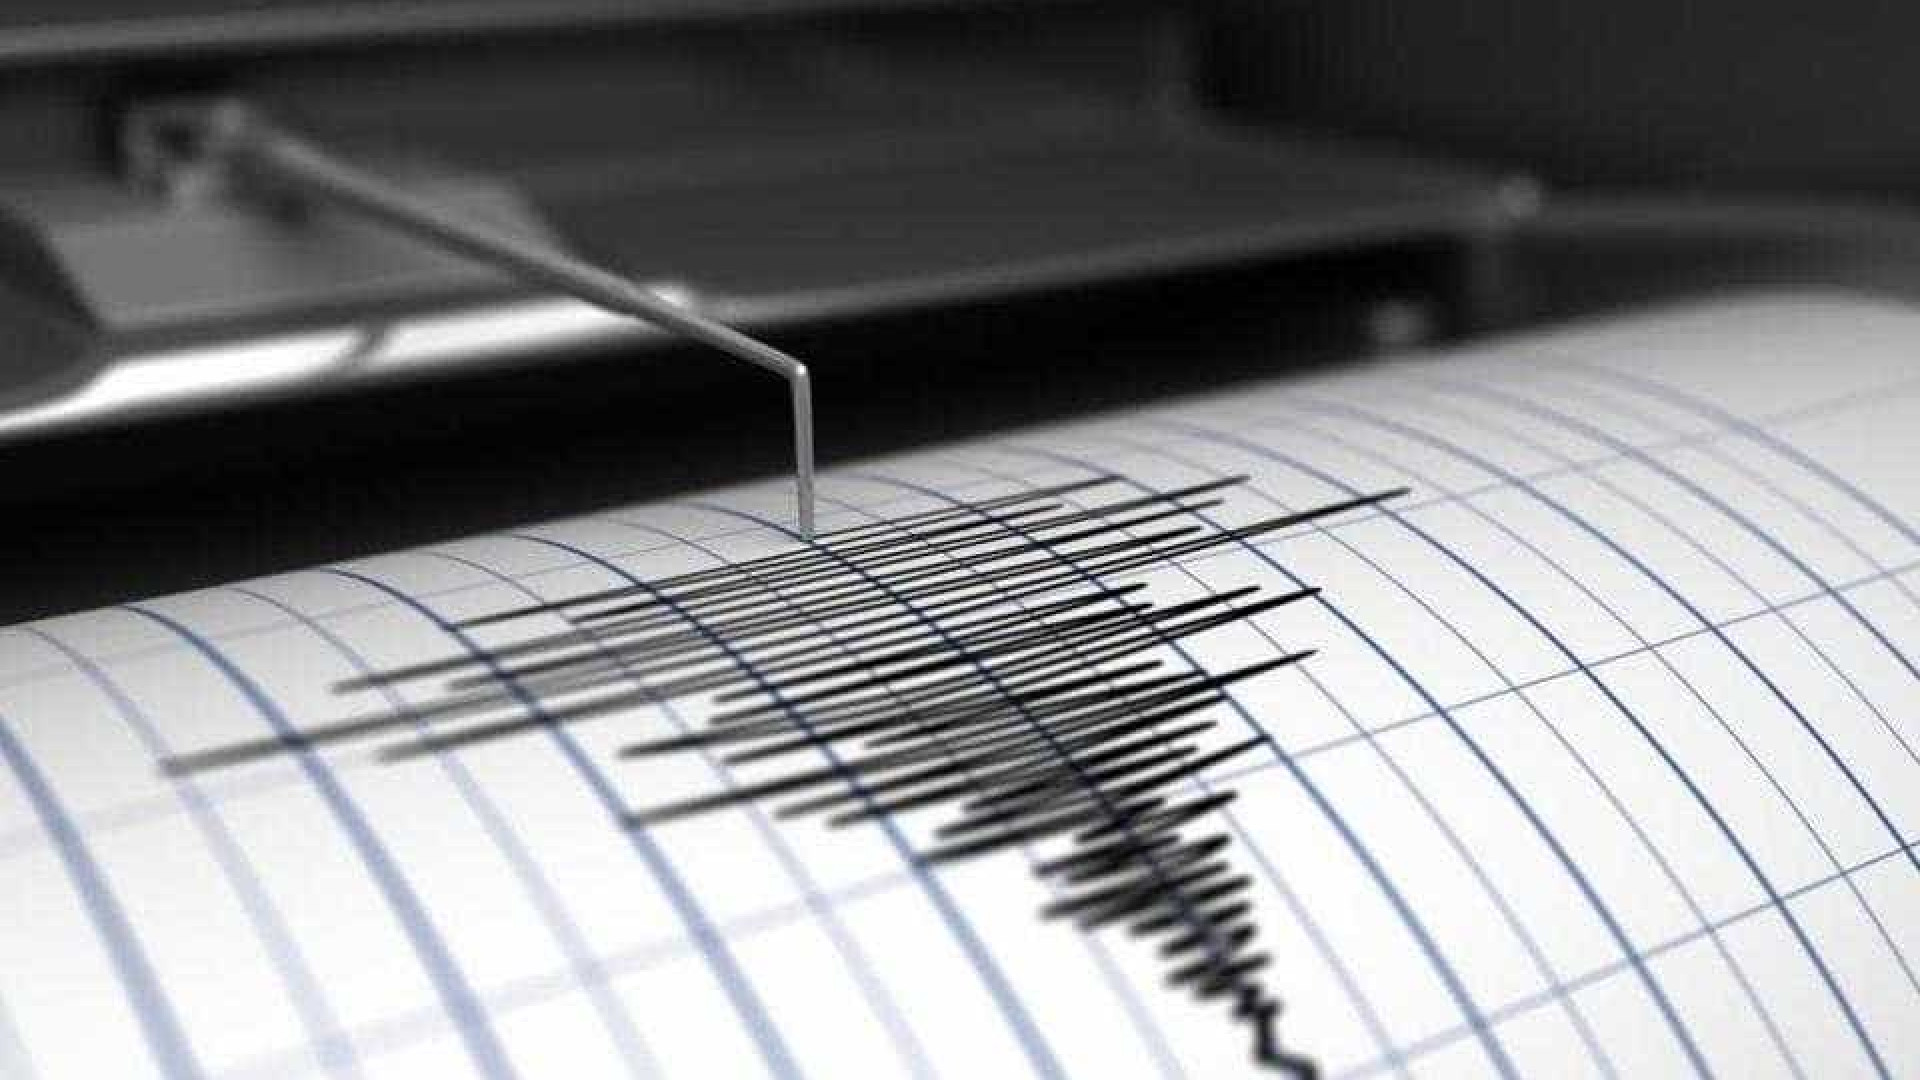 Tremor de terra no bairro de Mutange põe Maceió em alerta